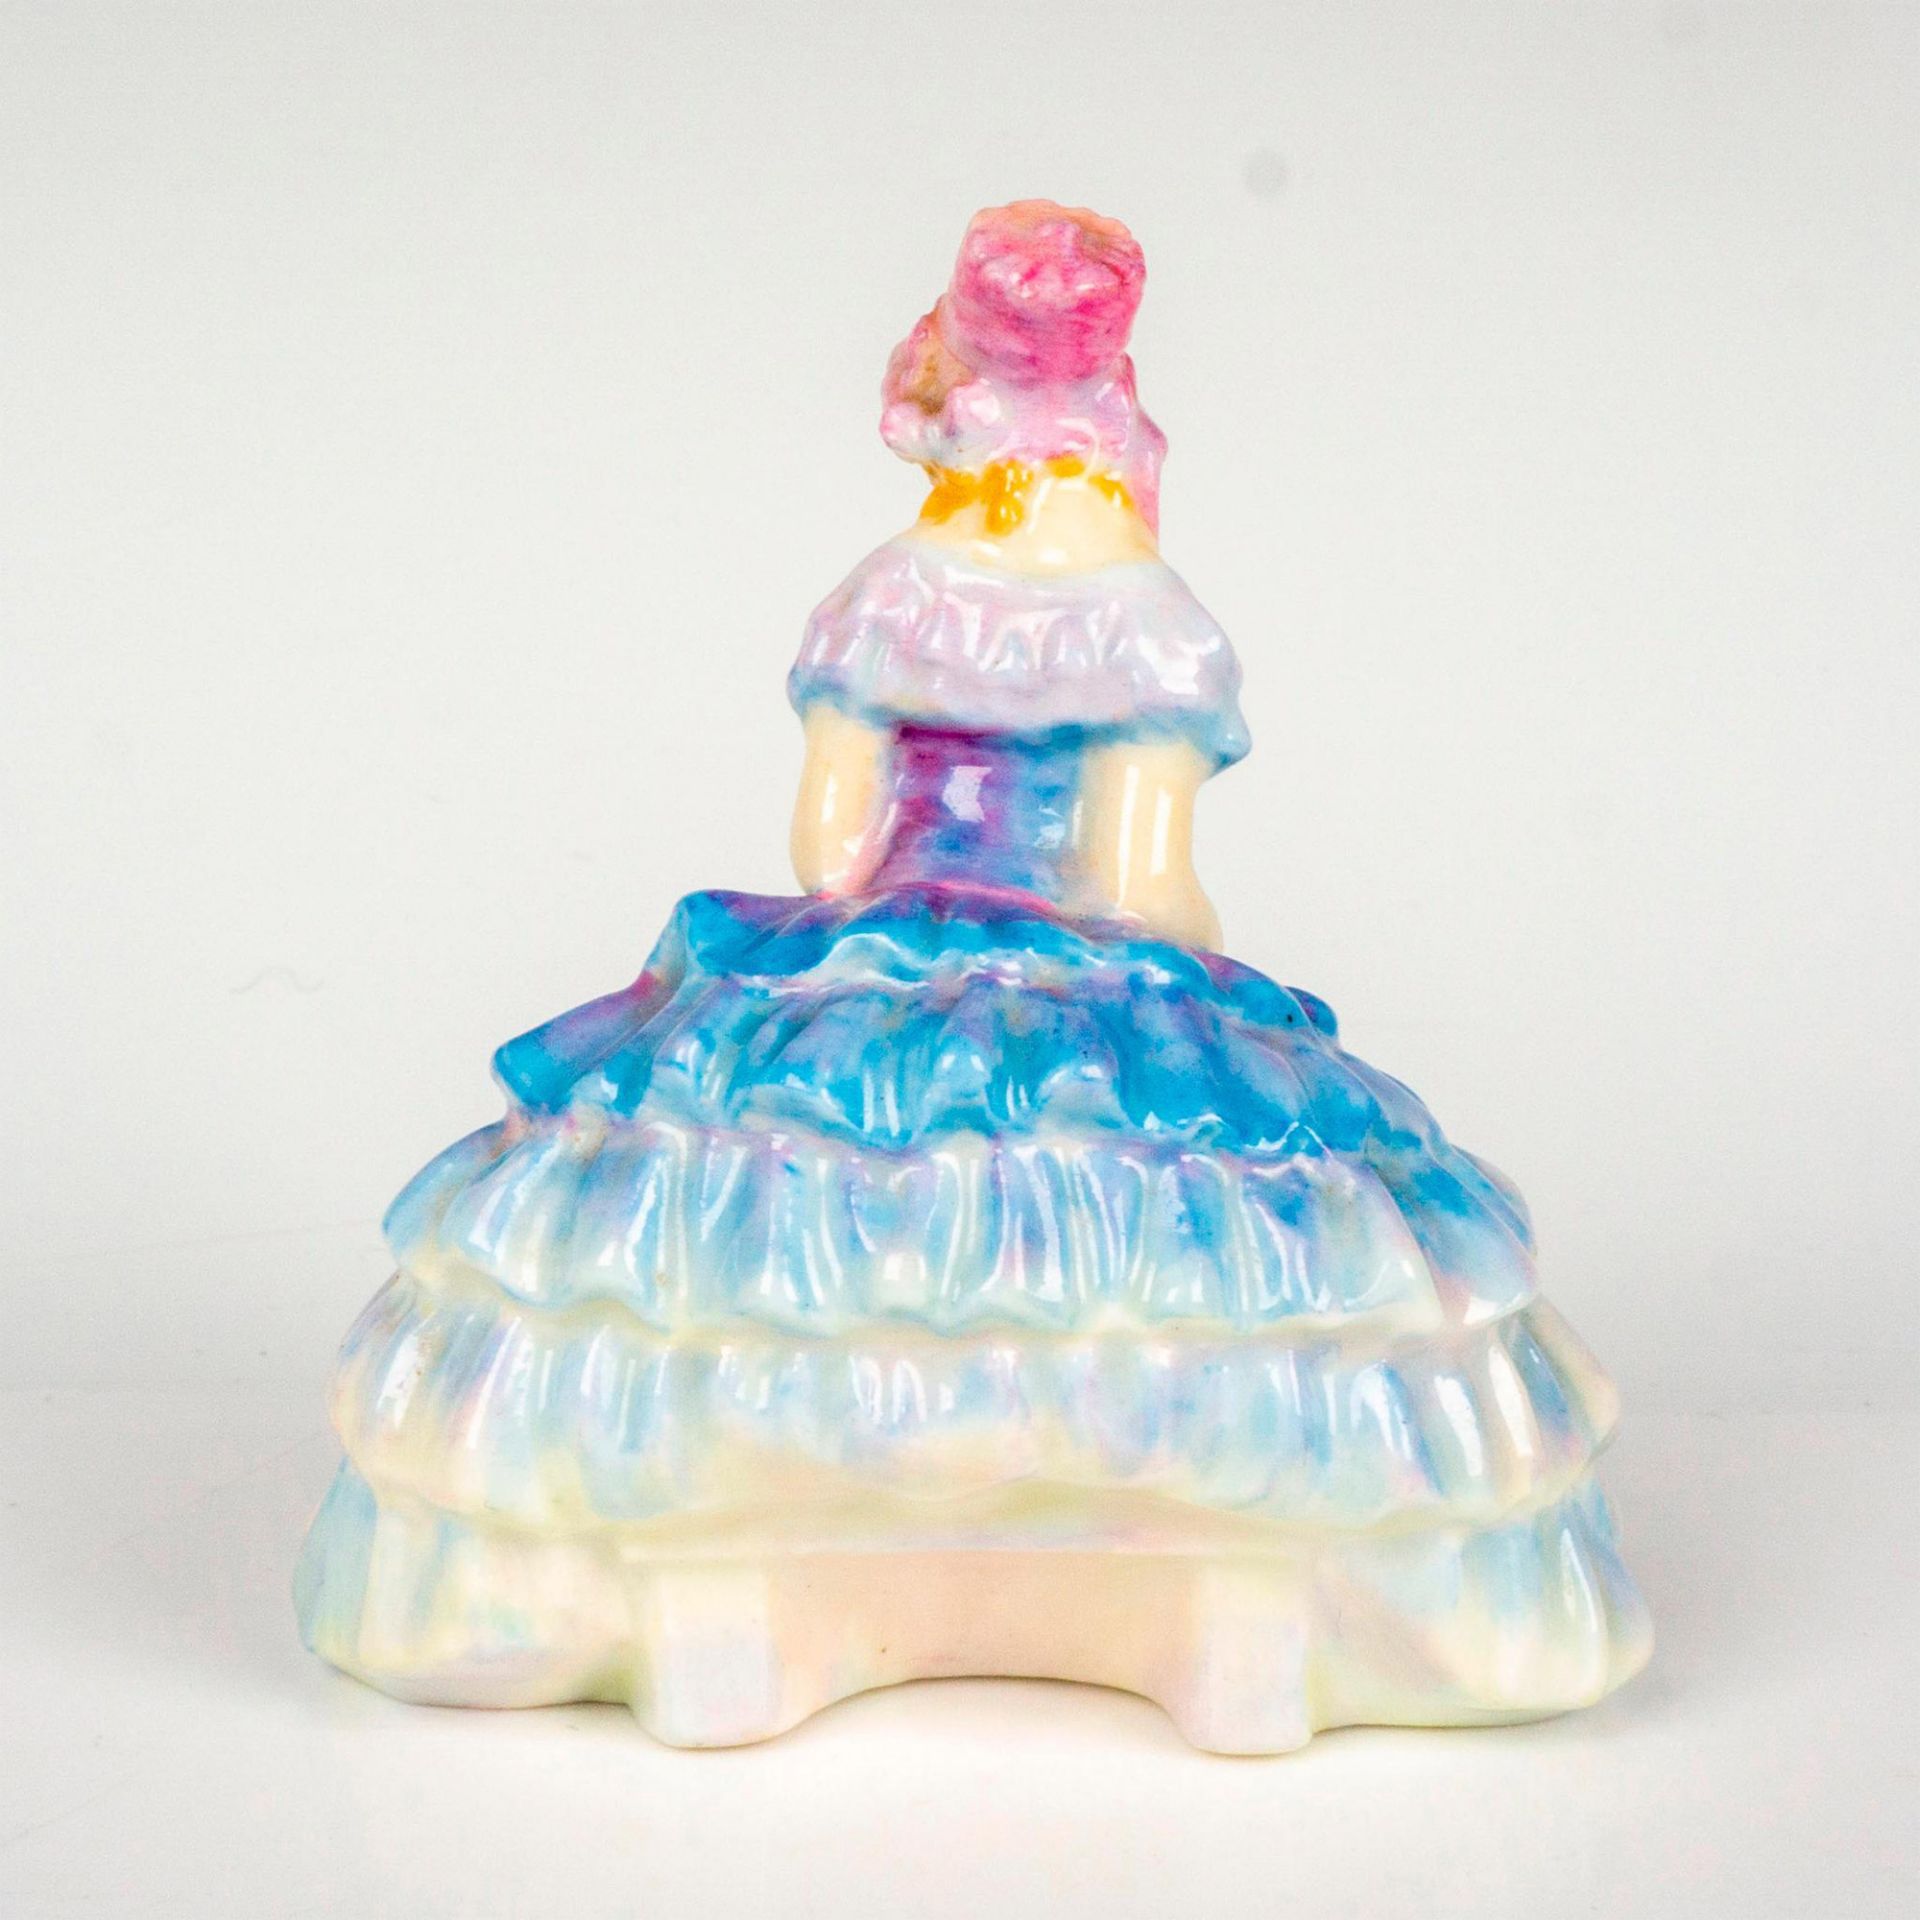 Chloe MI0 Mini - Royal Doulton Figurine - Image 2 of 3